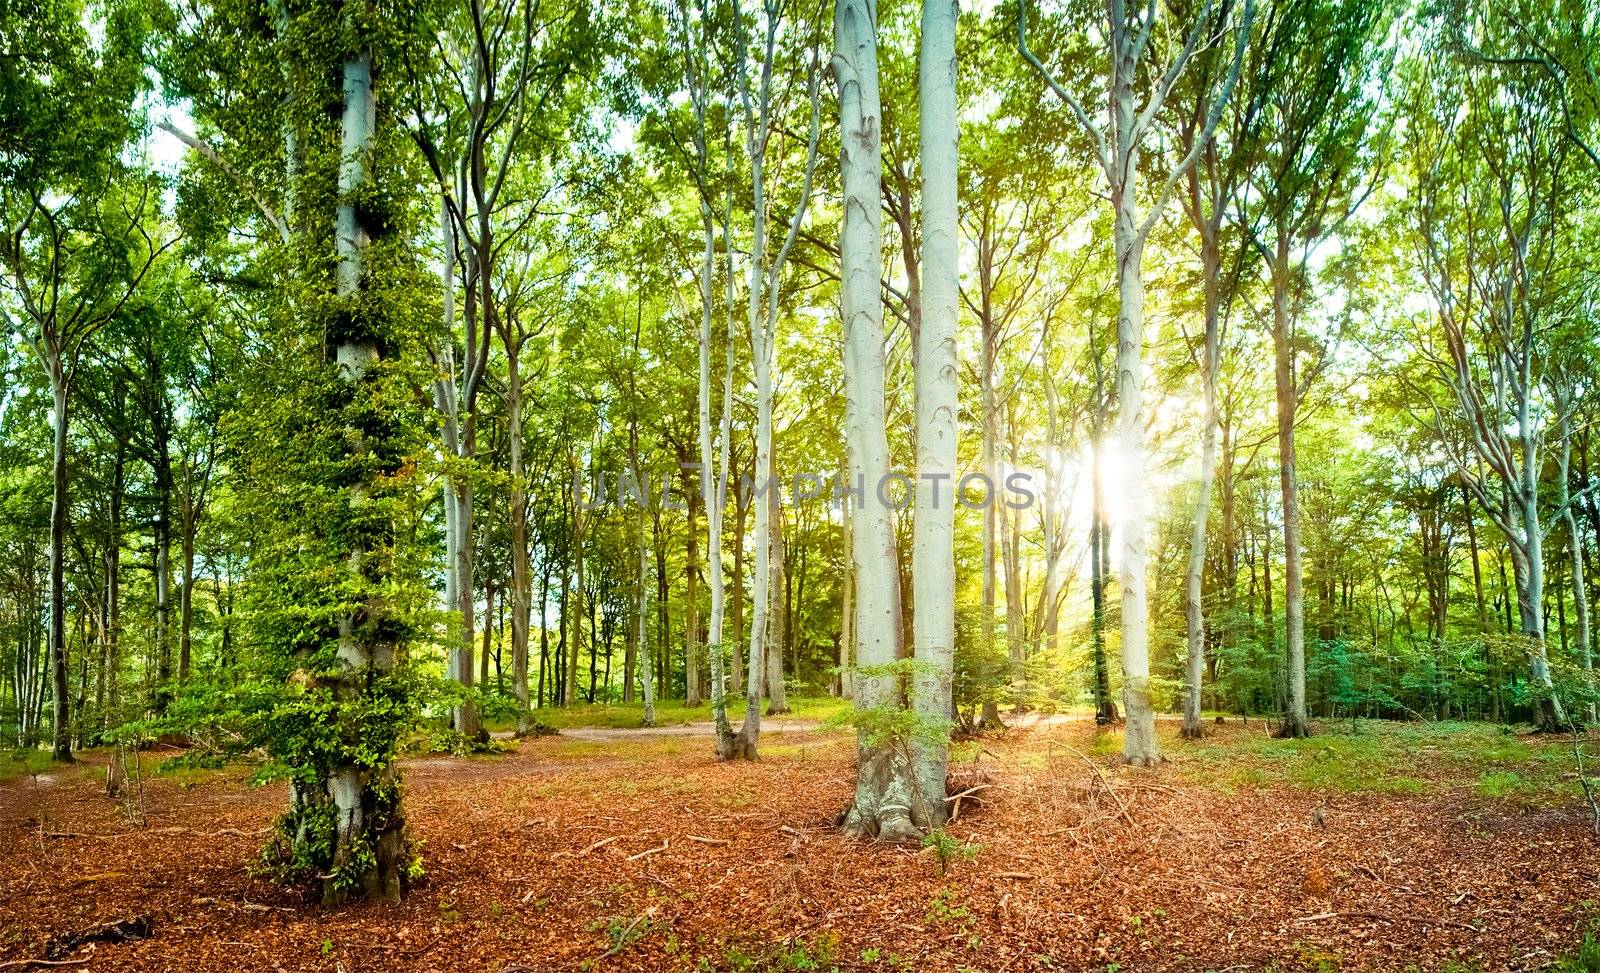 beech forest in late summer on the island of ruegen, germany